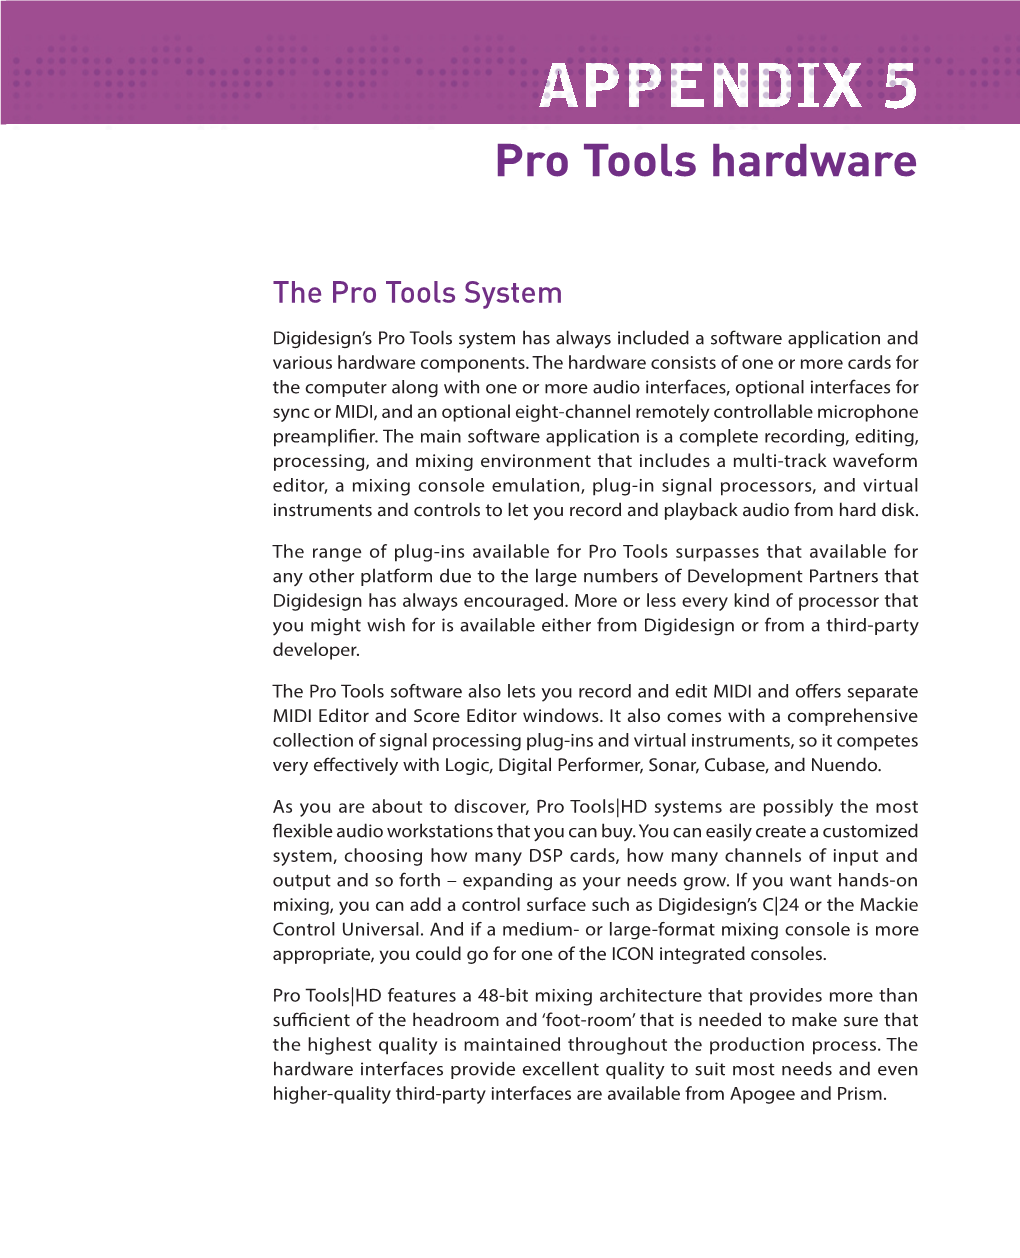 Pro Tools Hardware